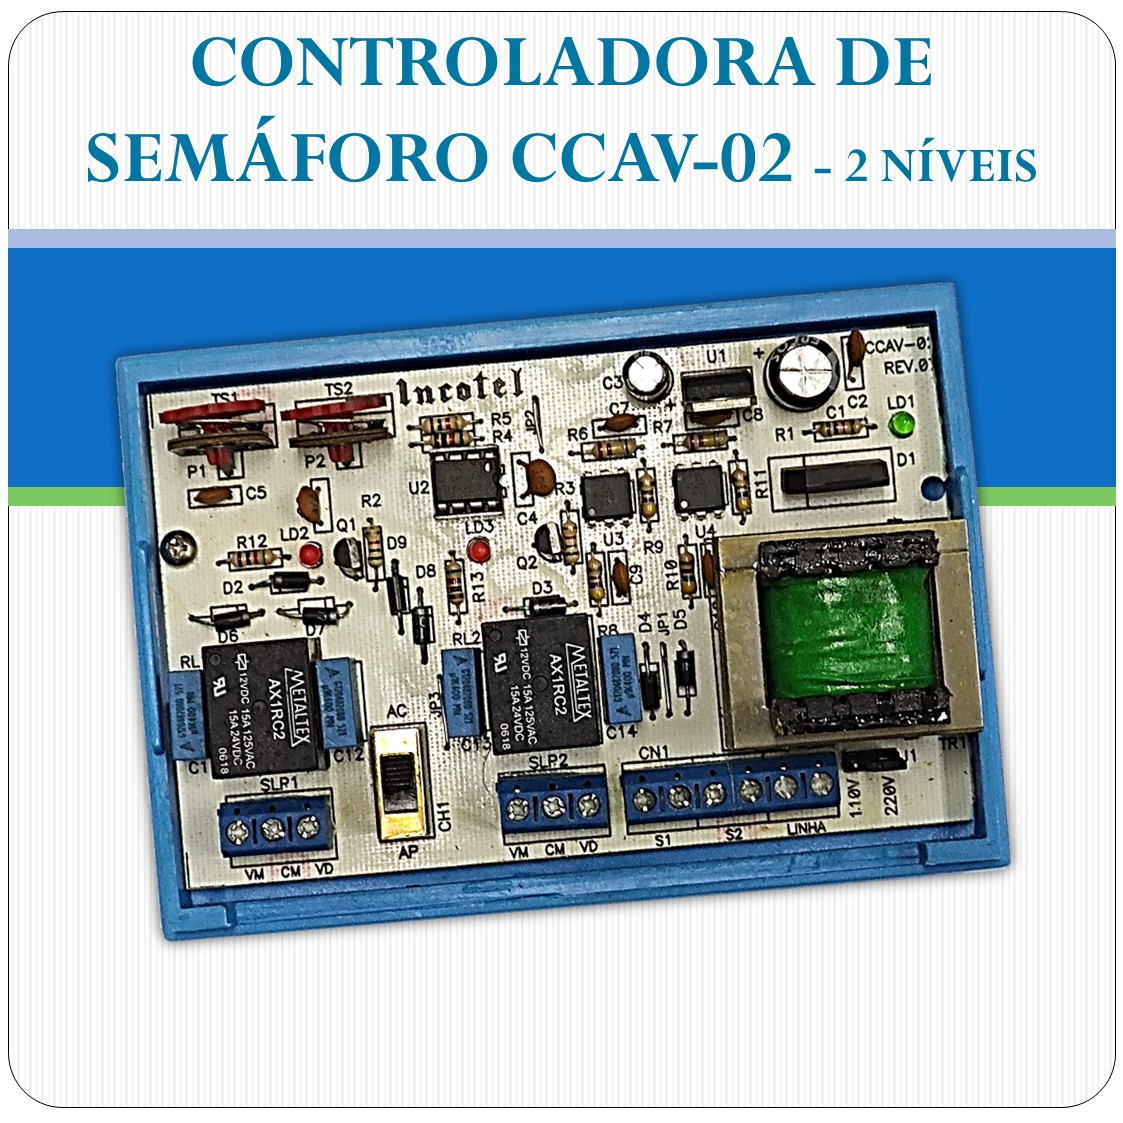 Controladora de Semaforo Incotel CCAV-02 - 2 níveis